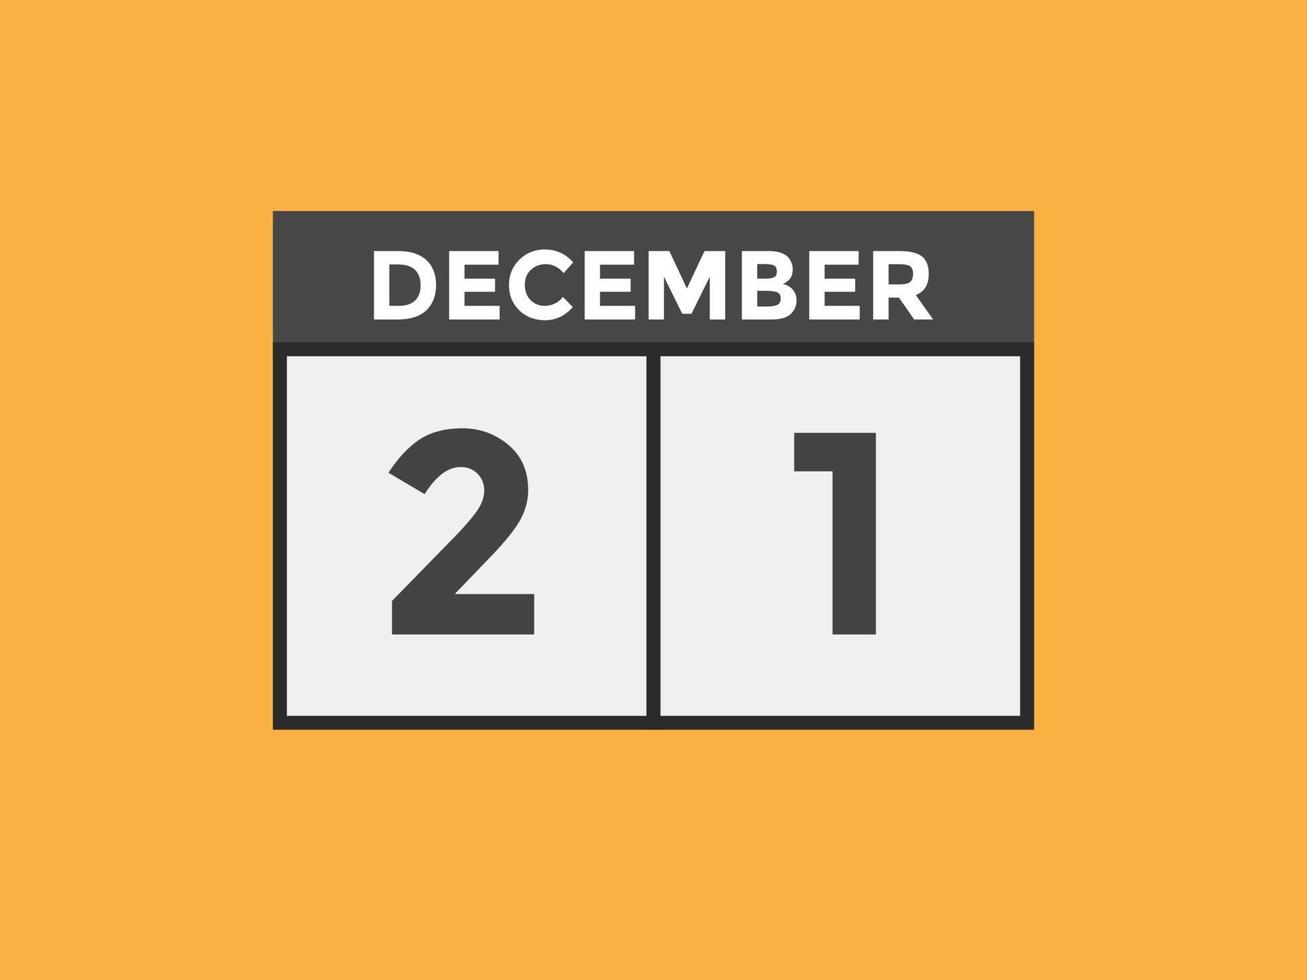 december 21 calendar reminder. 21th december daily calendar icon template. Calendar 21th december icon Design template. Vector illustration